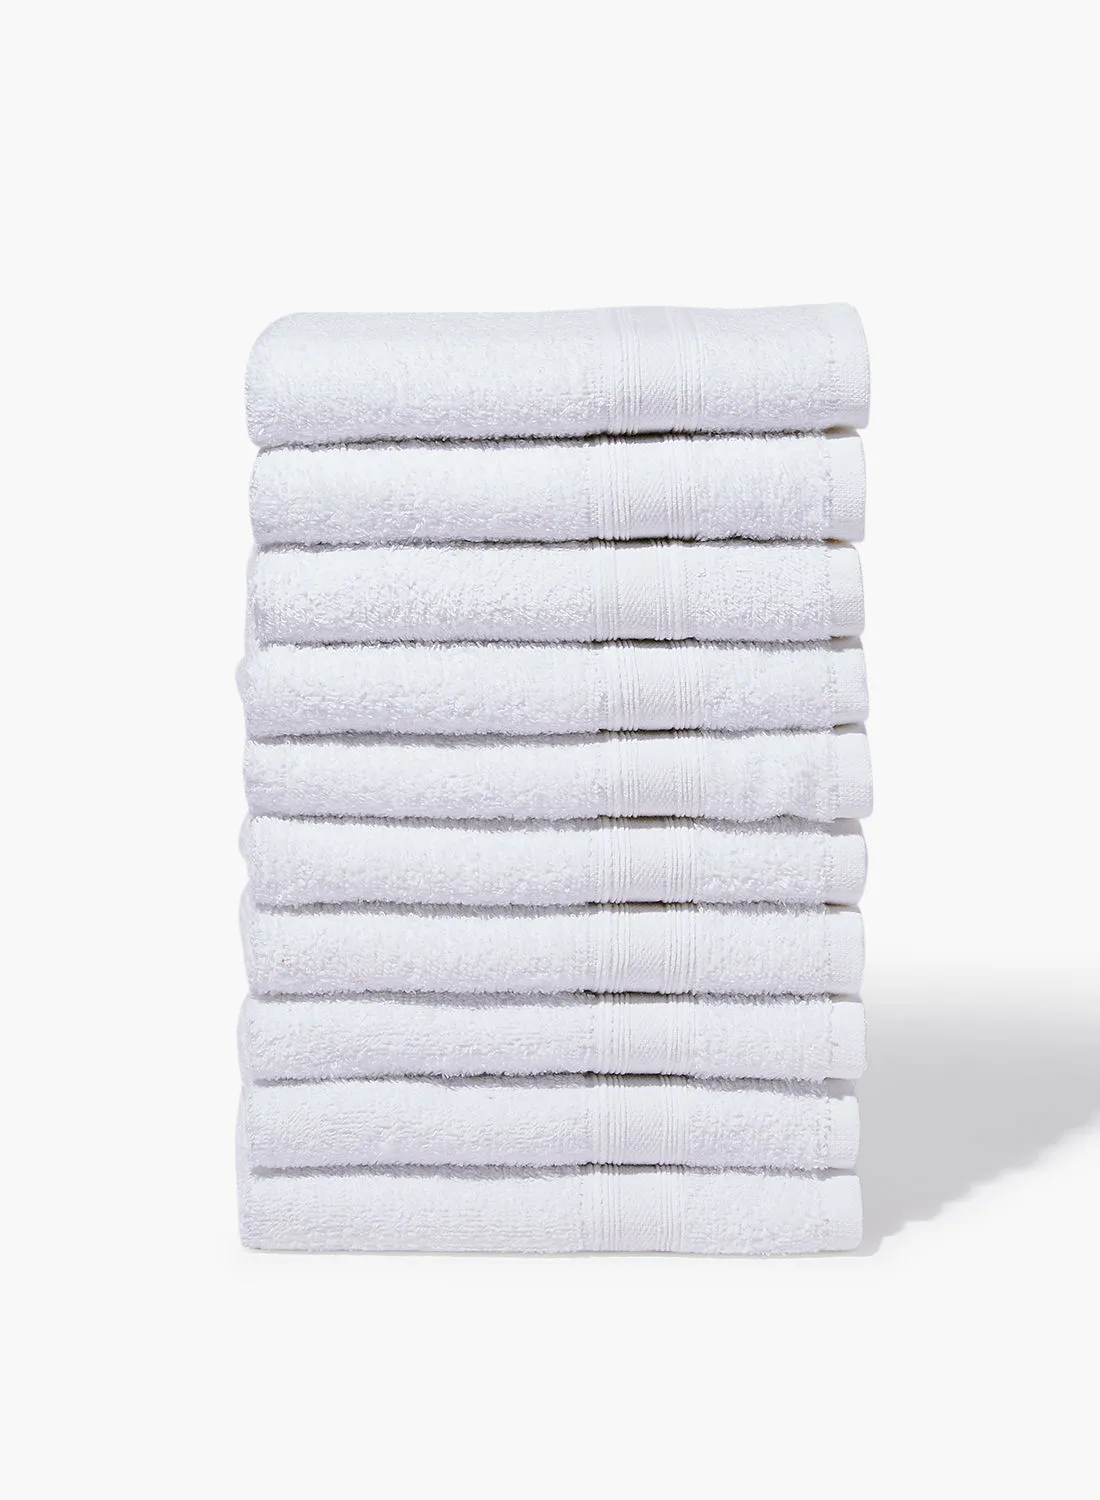 Amal 10 Piece Bathroom Towel Set - 400 GSM 100% Cotton Terry - 10 Face Towel - White Color -Quick Dry - Super Absorbent